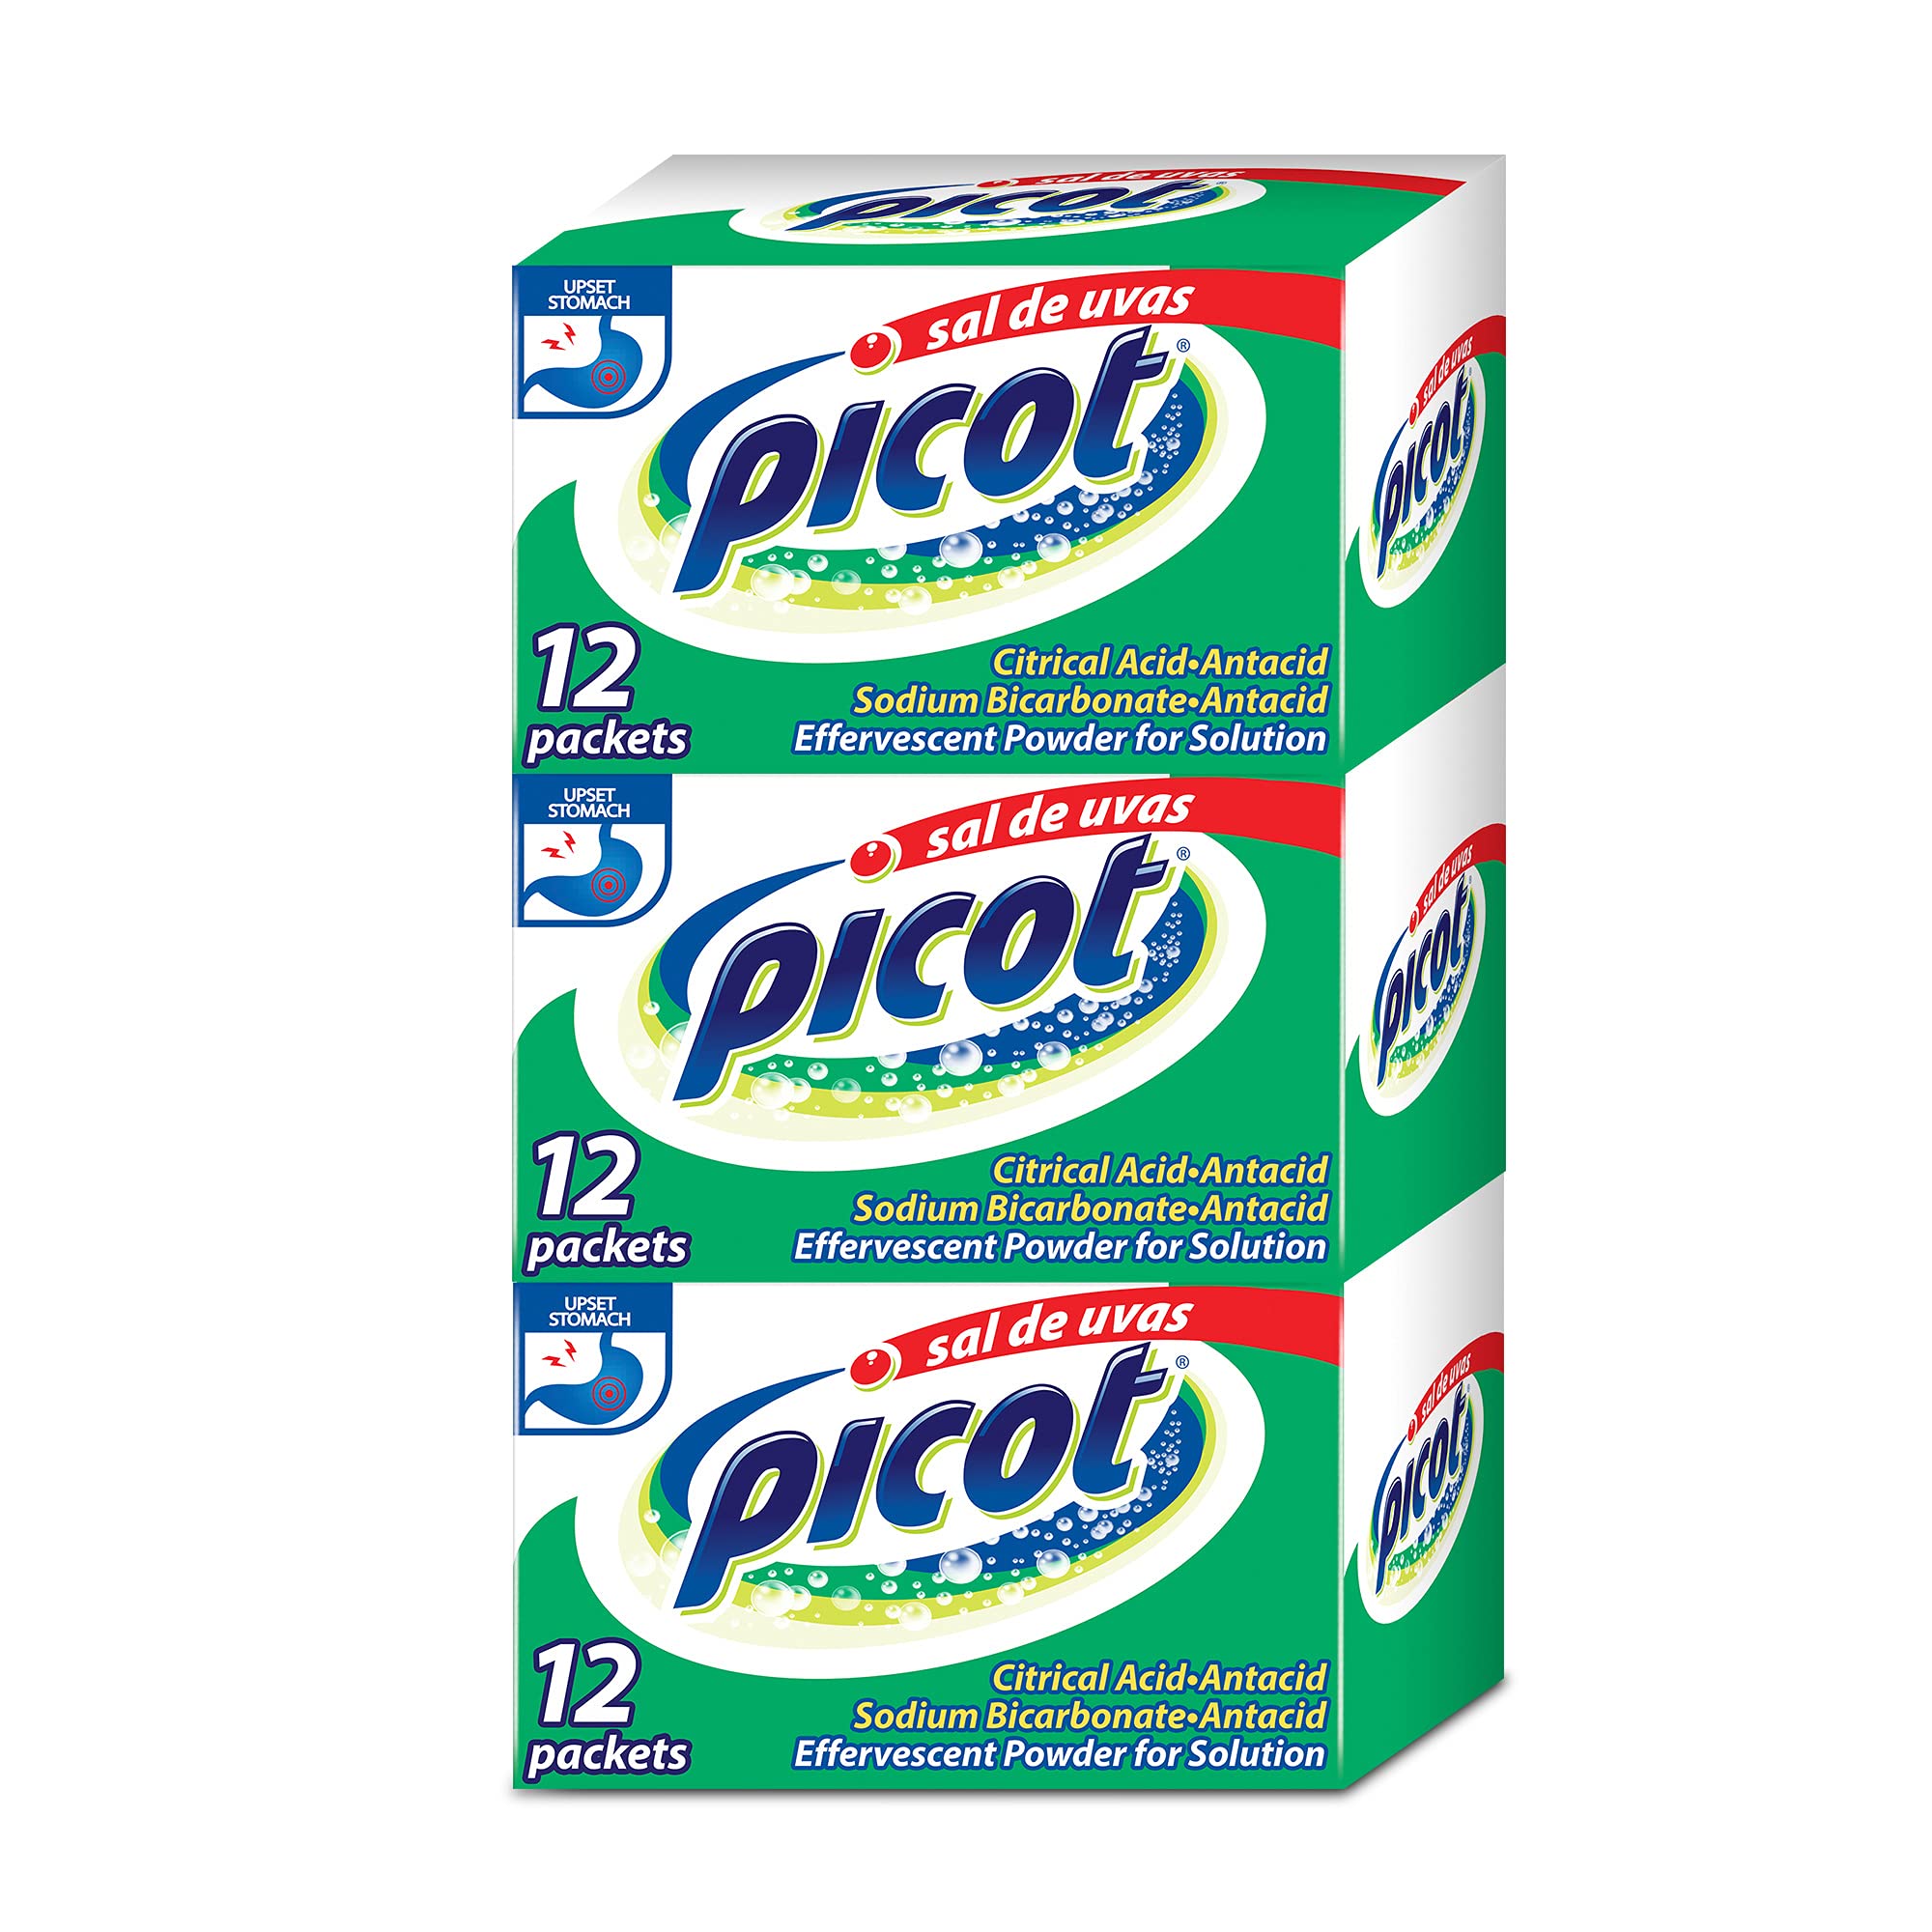 Sal de Uvas Picot, Effervescent Powder Solution, Antacid, 3-Pack of 12 Antacid Packets, 3 Boxes